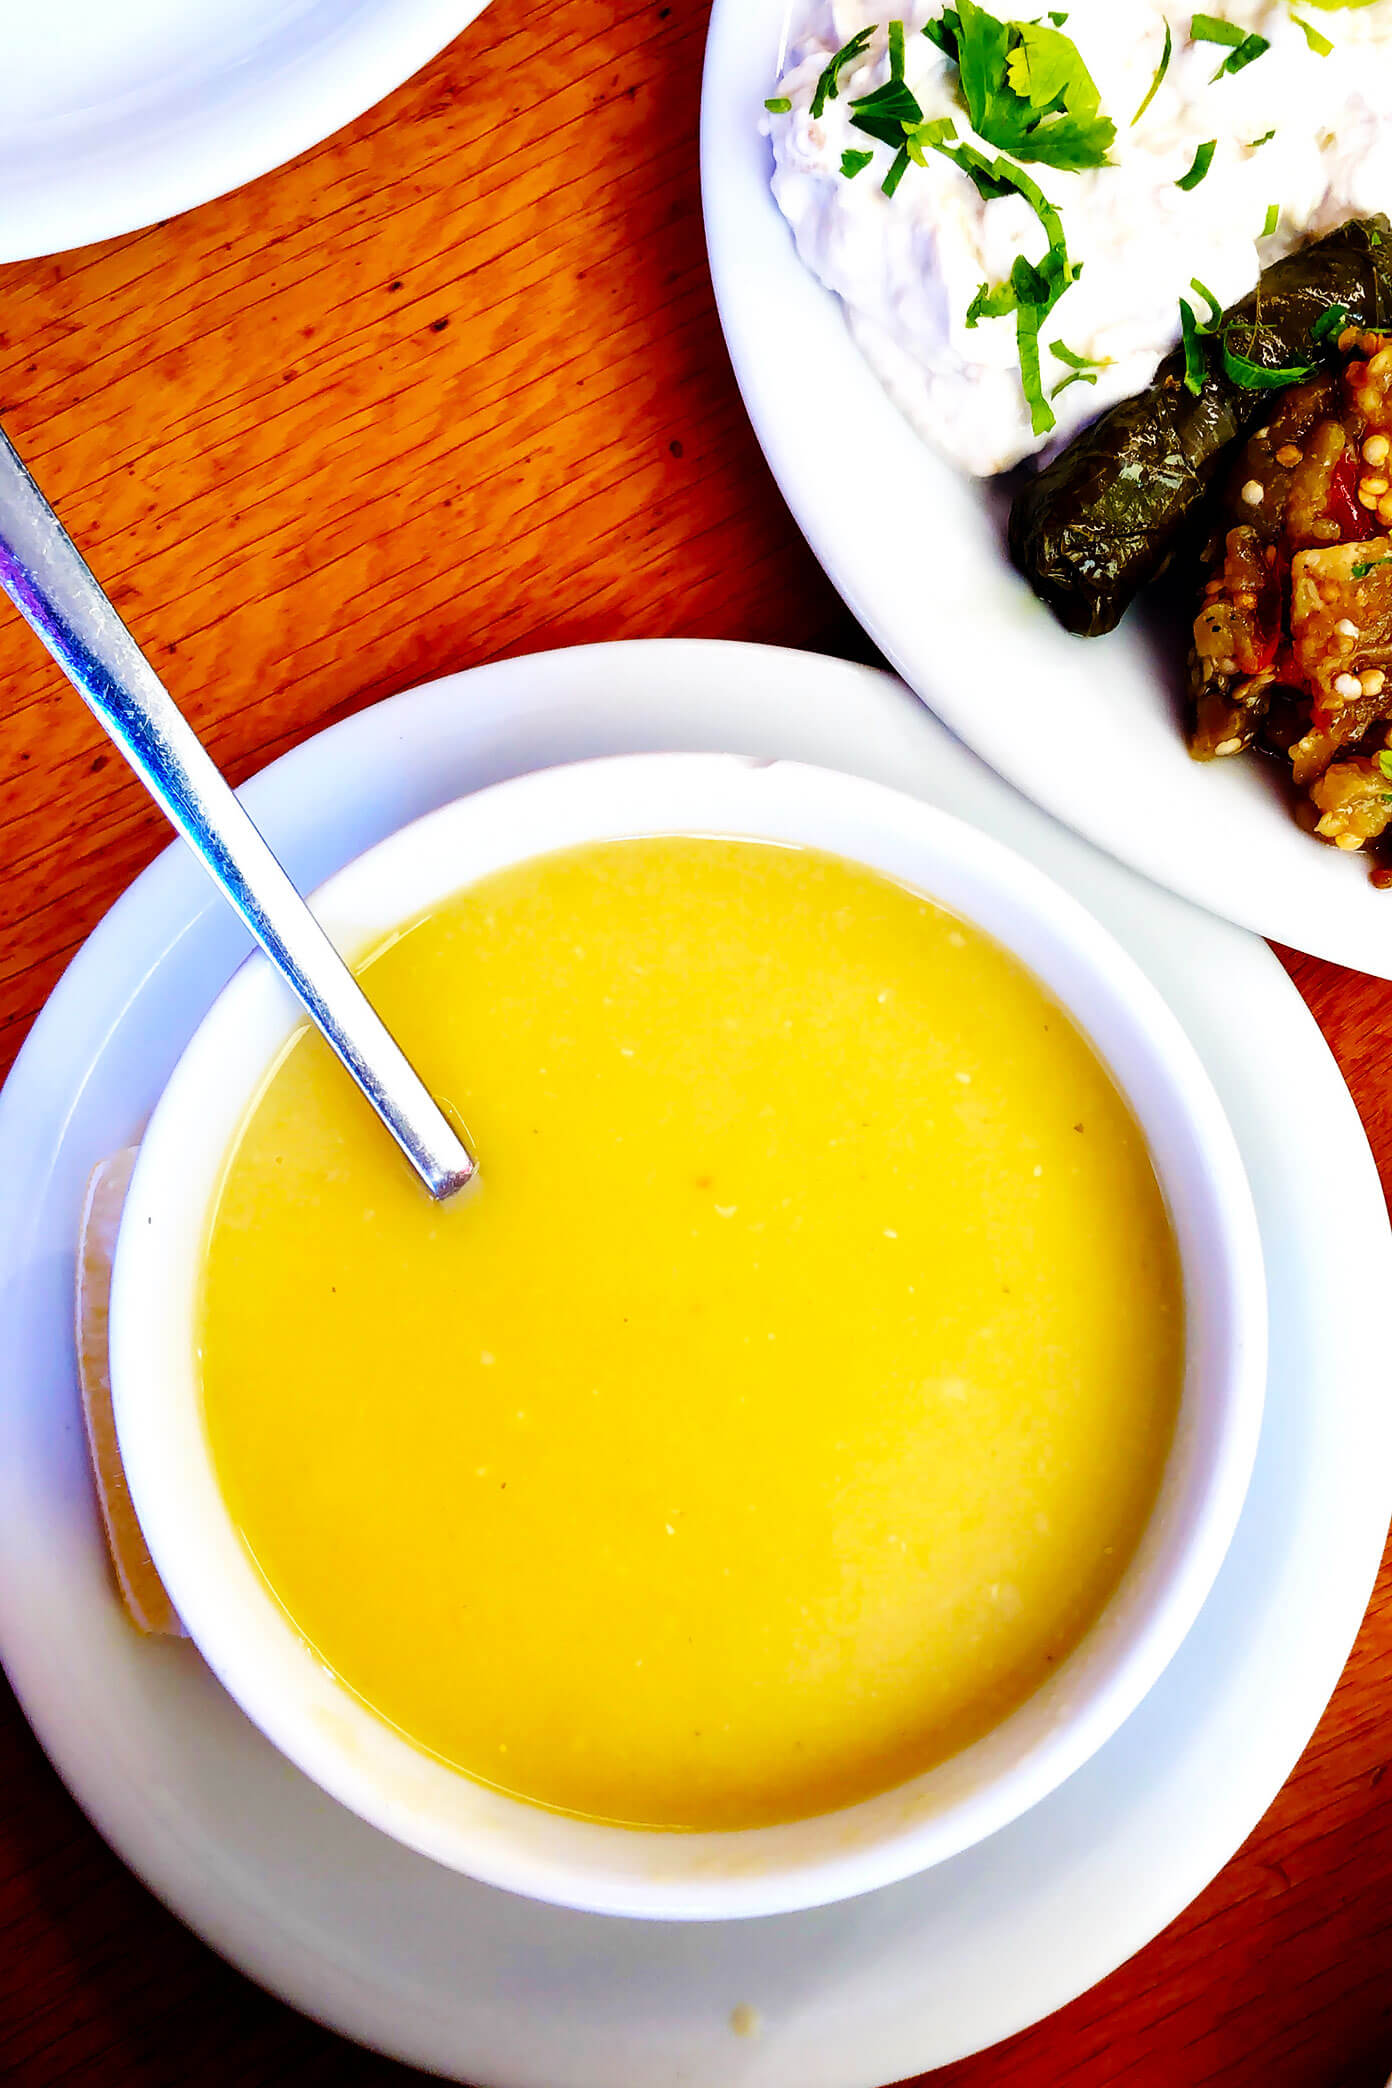 Turkish lentil soup